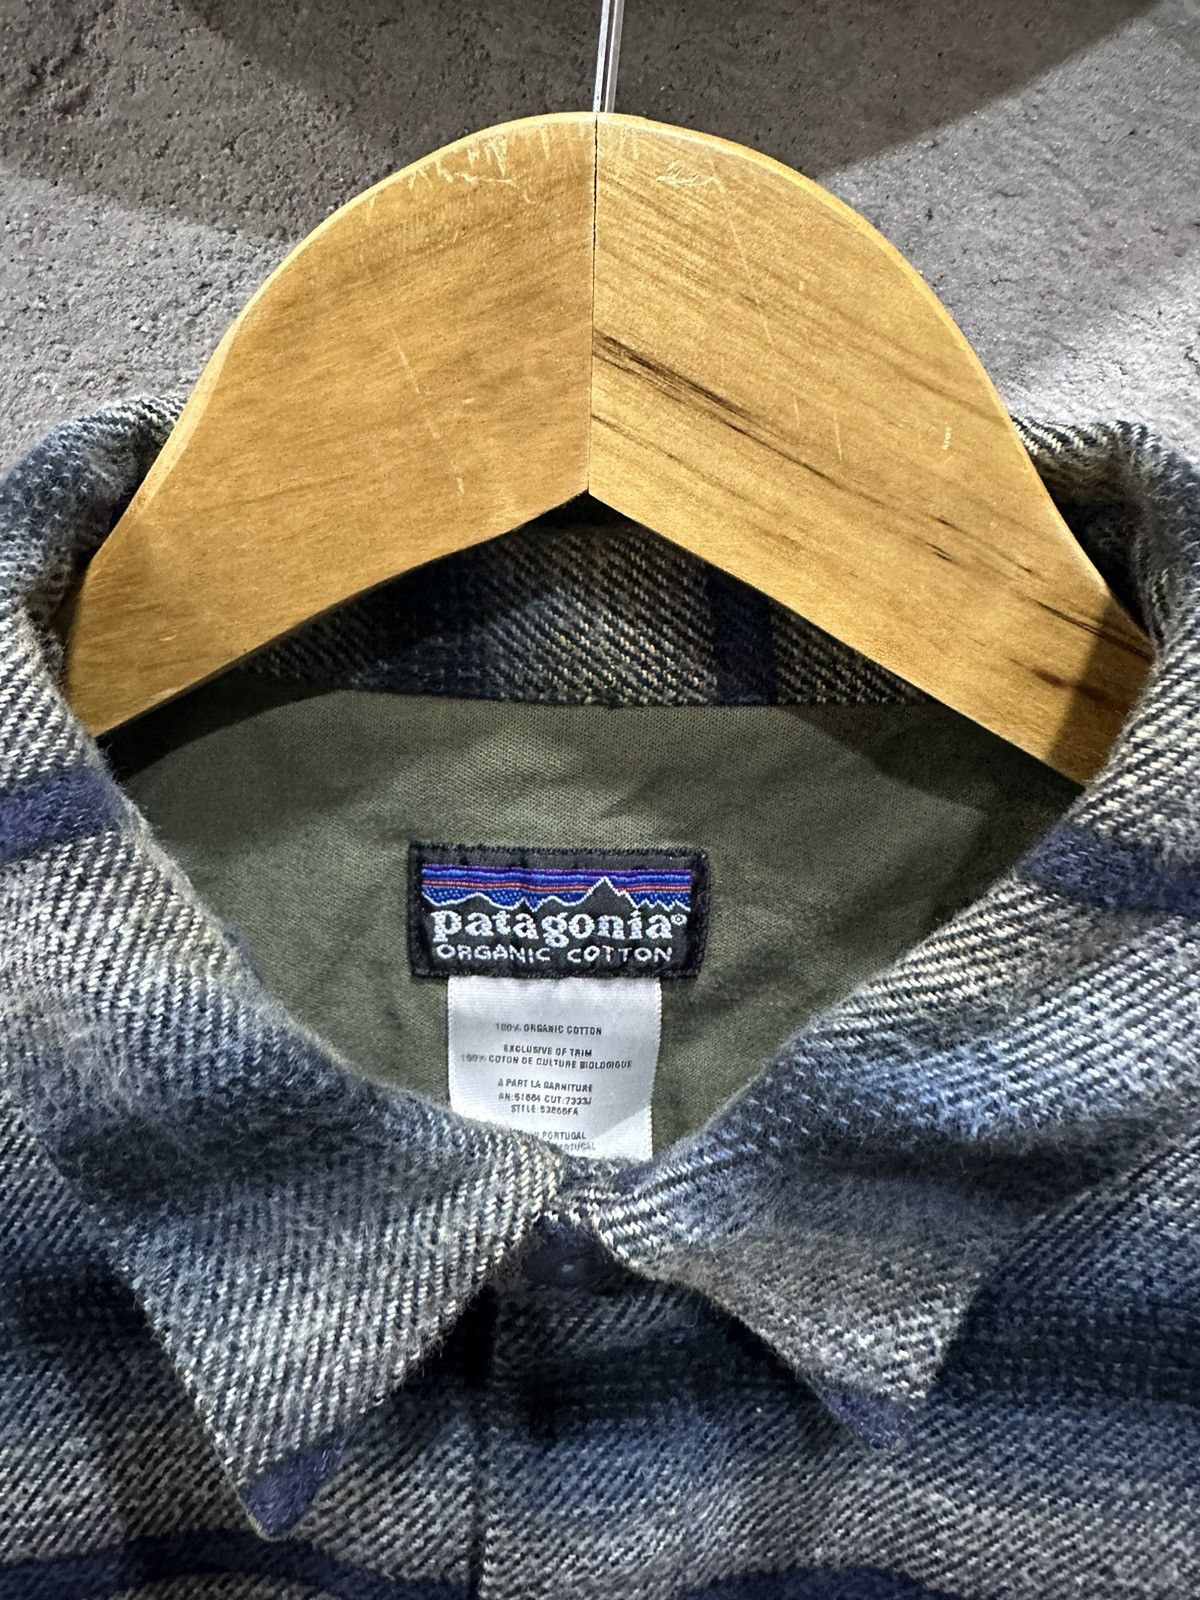 Patagonia Heavy Organic Cotton Flannel Shirt - 4